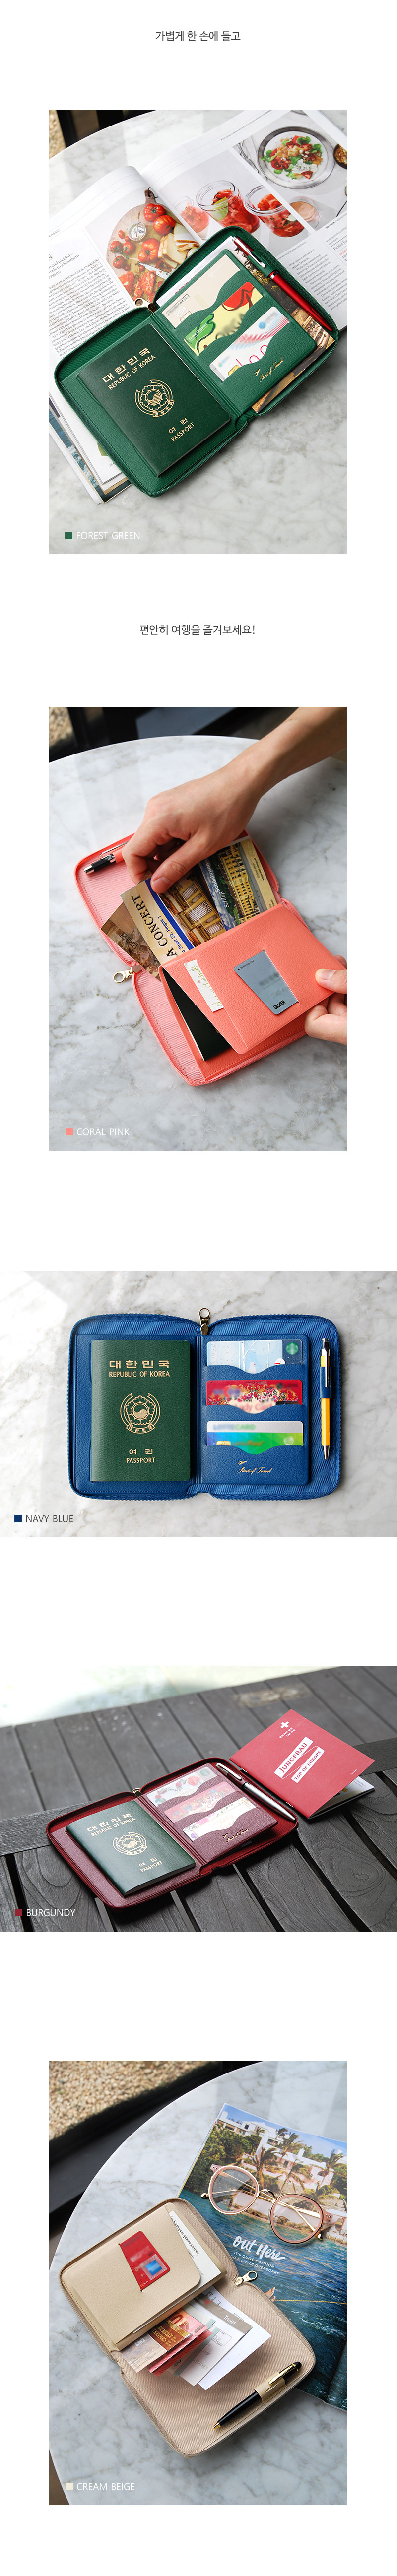 Travel Brief Pocket 25,500원 - 플레픽 여행/캠핑, 여권/네임택, 여권케이스, 파우치형 케이스 바보사랑 Travel Brief Pocket 25,500원 - 플레픽 여행/캠핑, 여권/네임택, 여권케이스, 파우치형 케이스 바보사랑